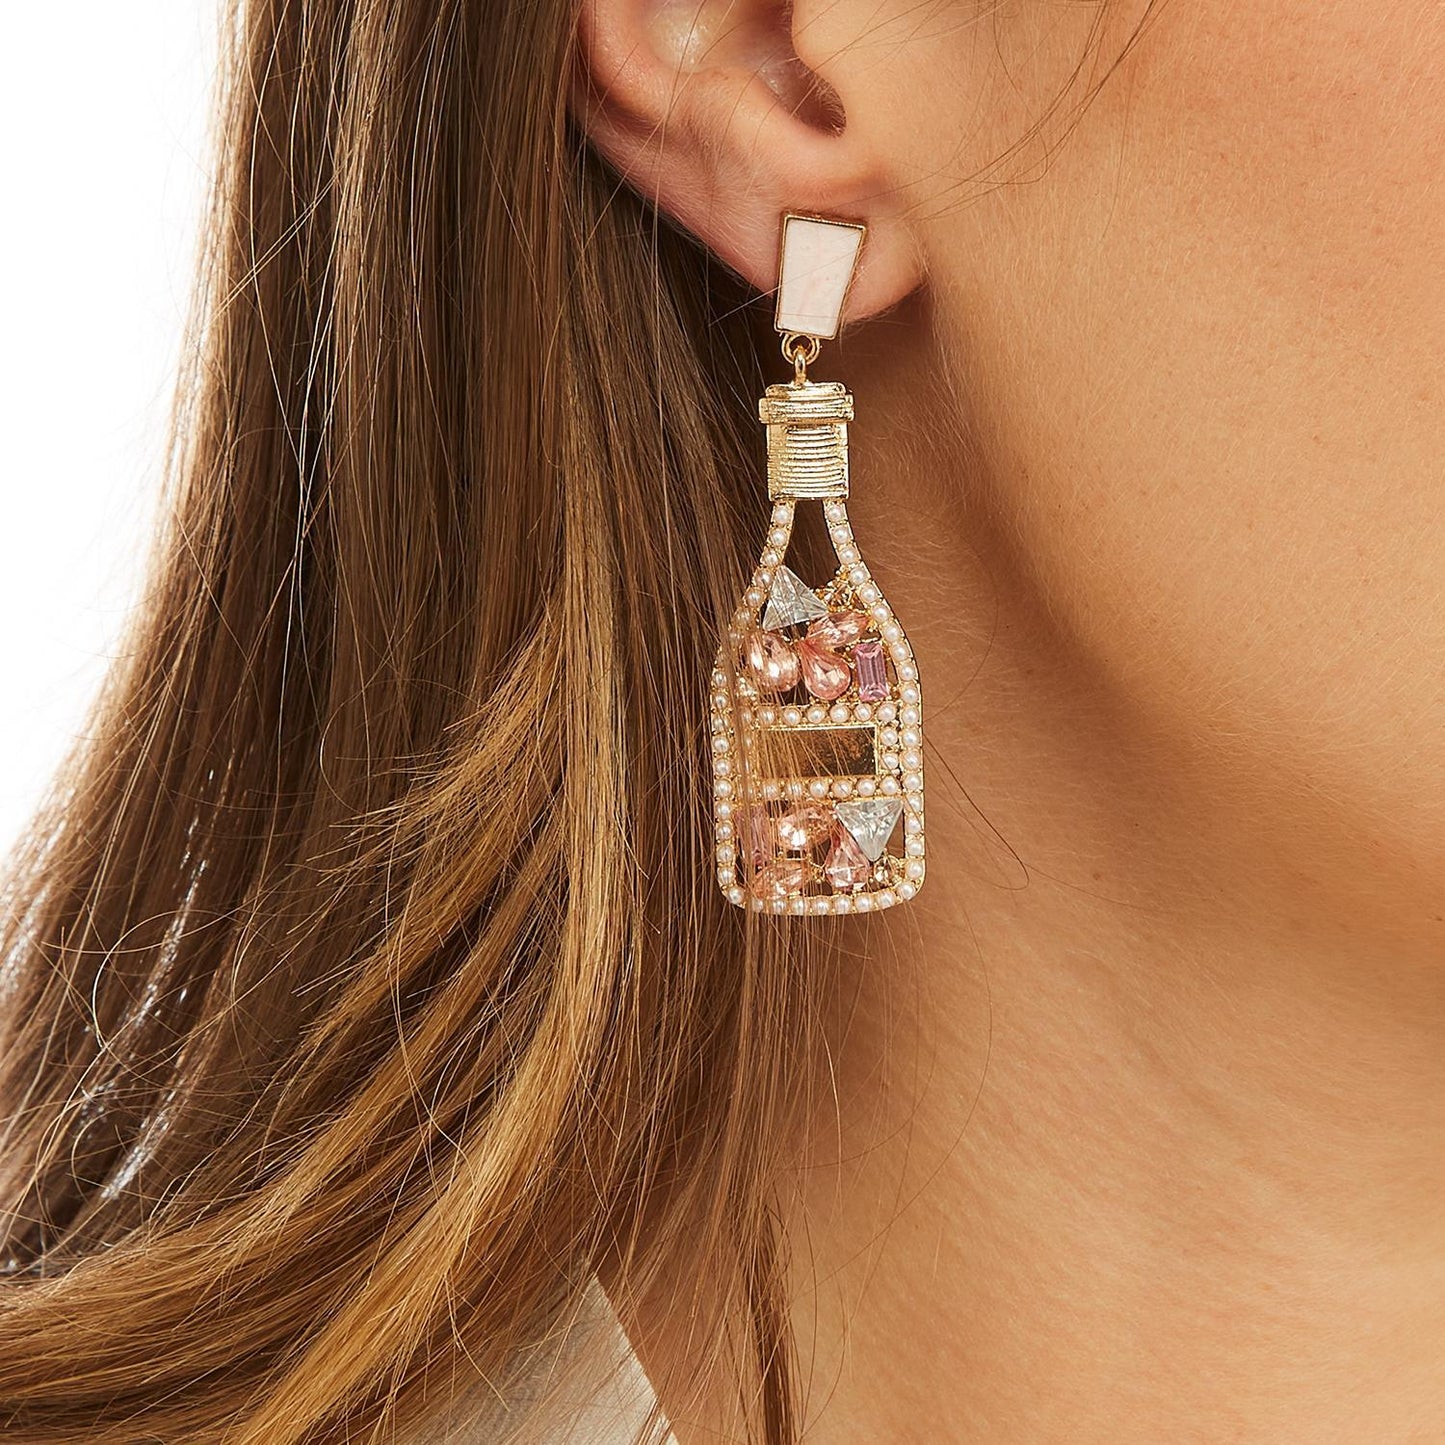 Crystal Embellished Earrings - Let's Celebrate